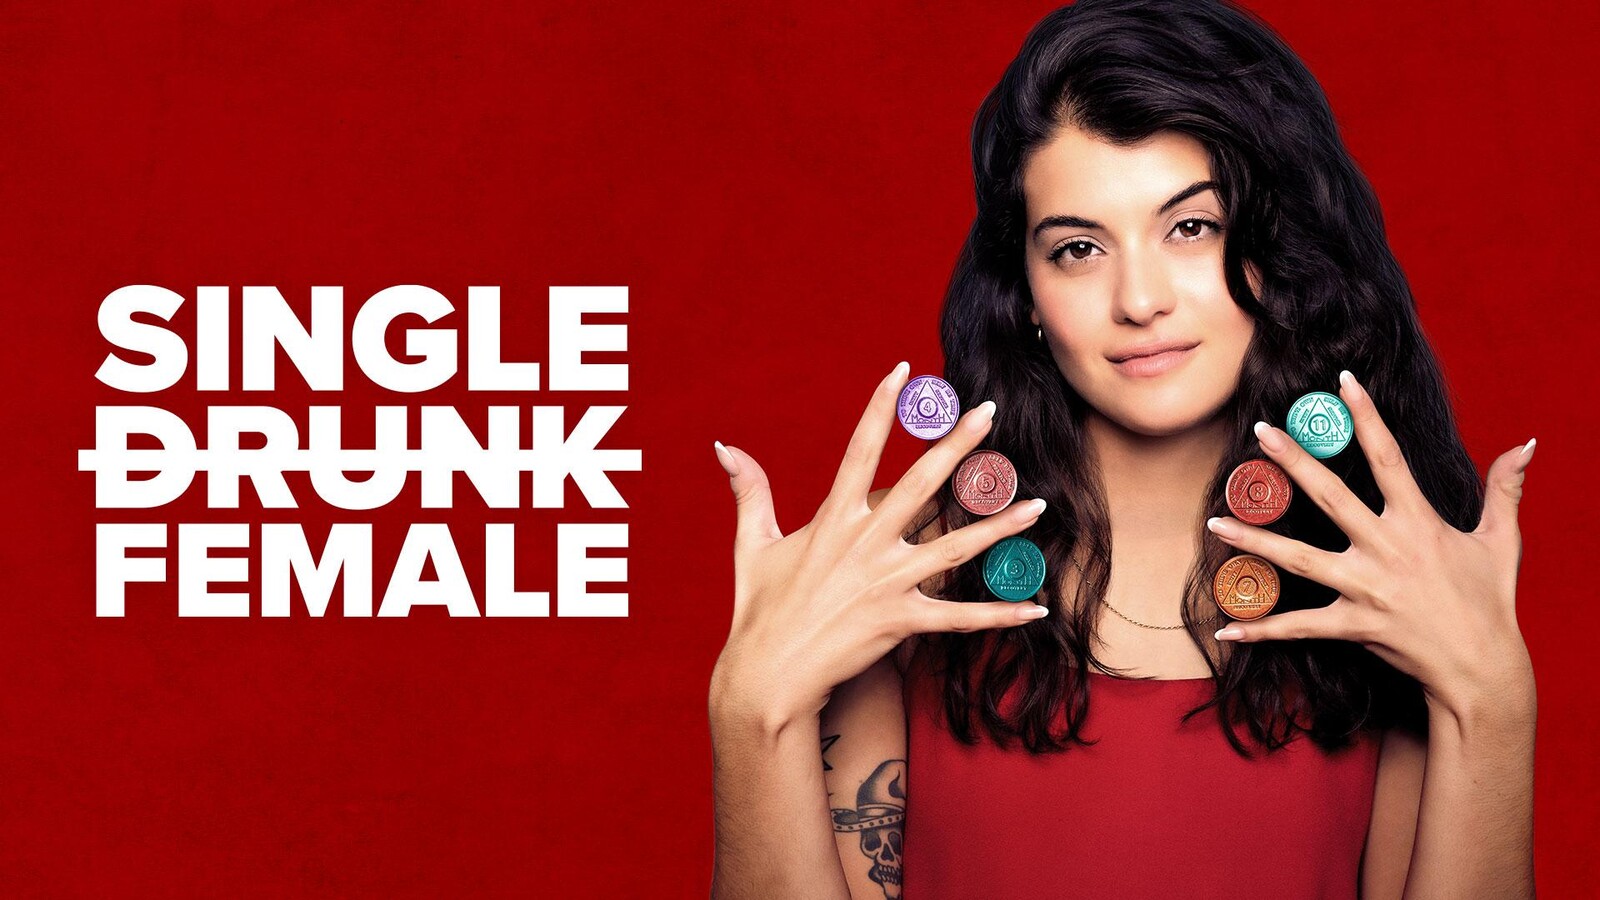 Watch Single Drunk Female TV Show - Streaming Online | Freeform